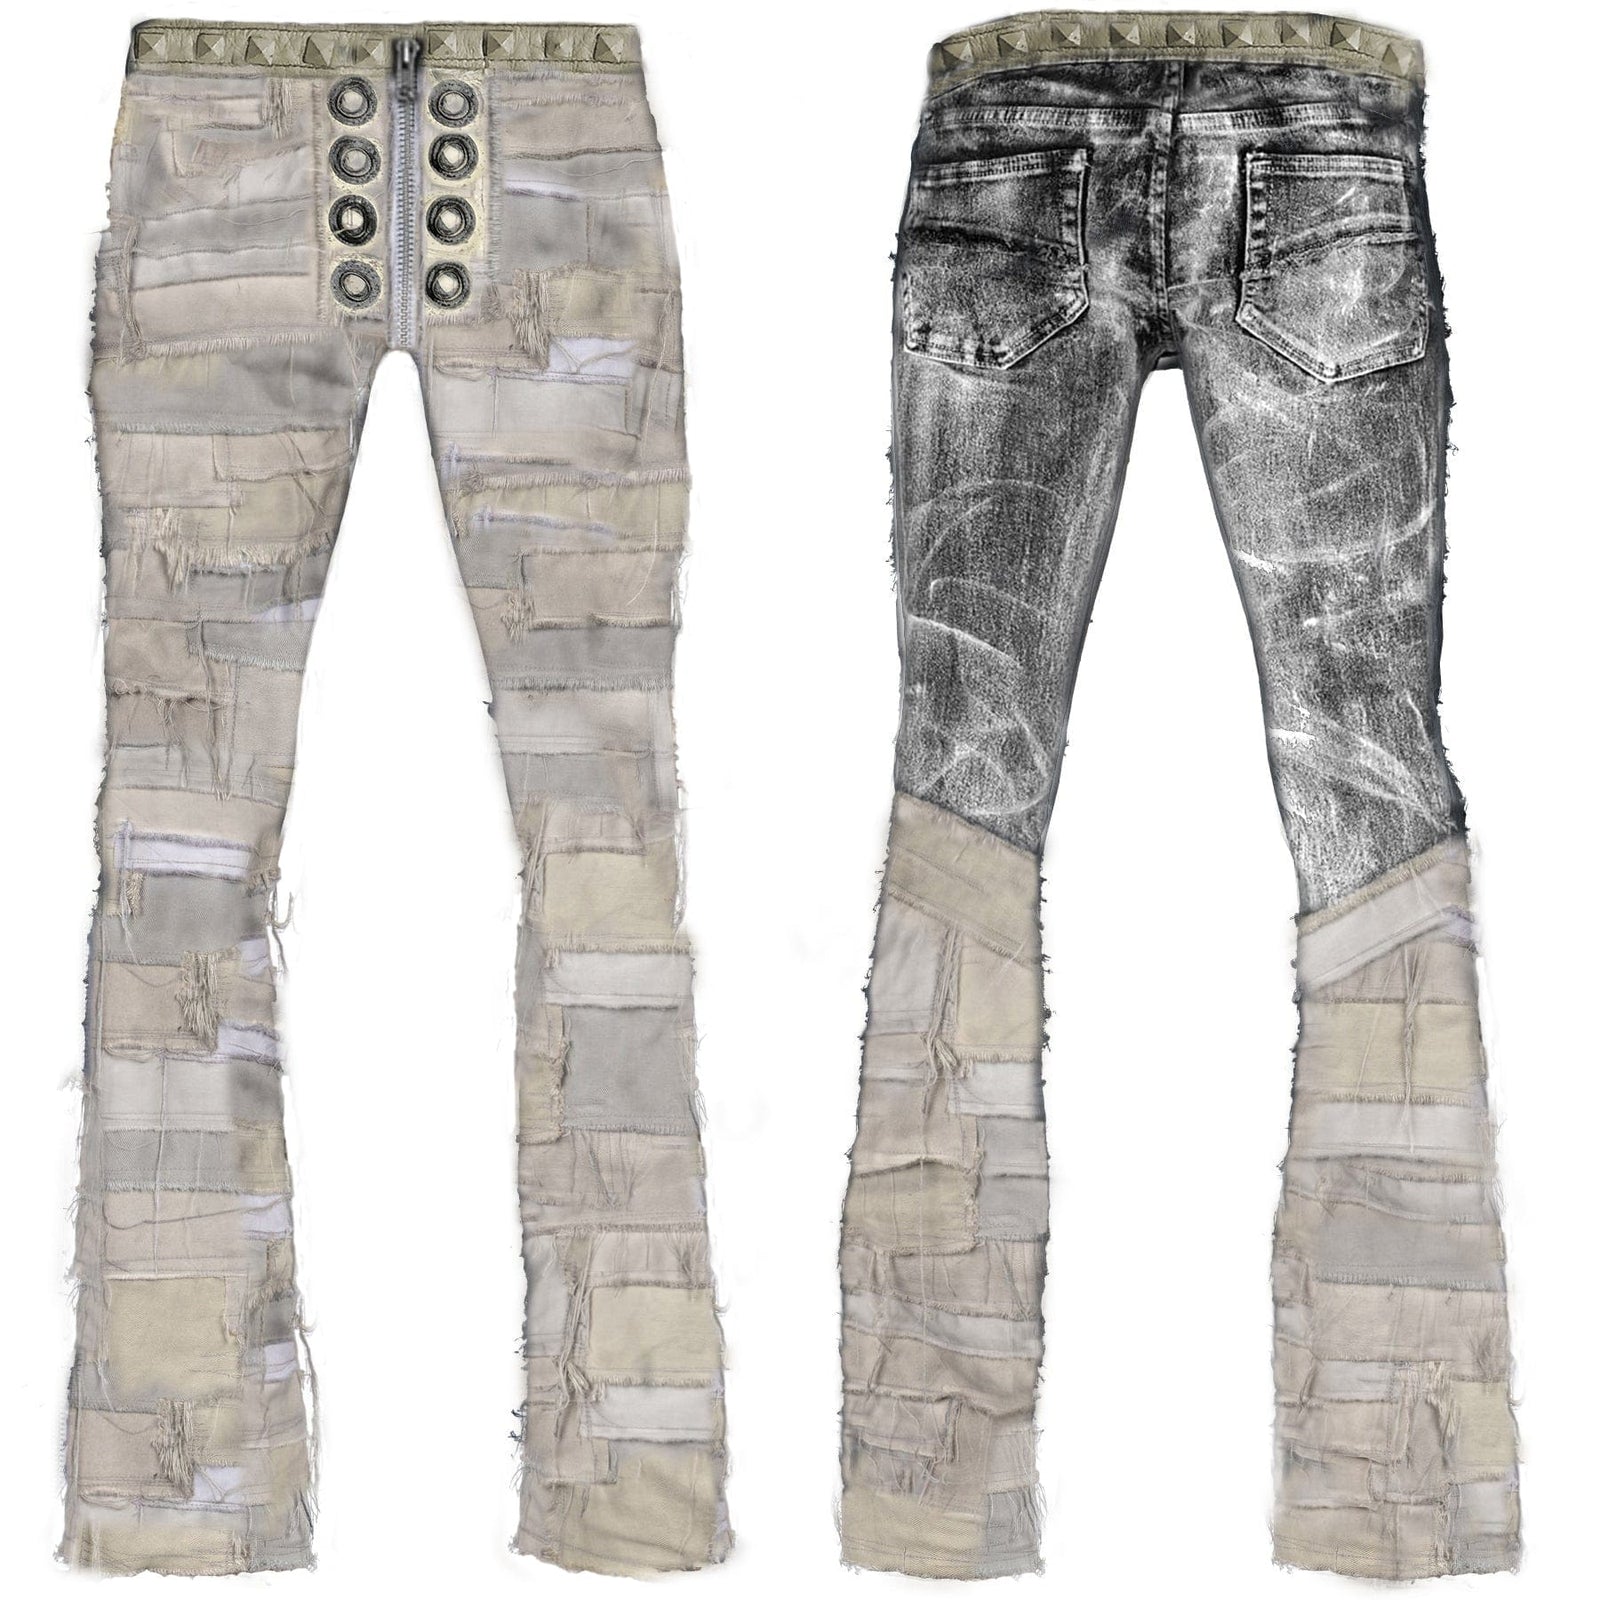 Custom Chop Shop Pants Wornstar Custom - Jeans - Scars and Stripes - Sandstorm - READY TO SHIP